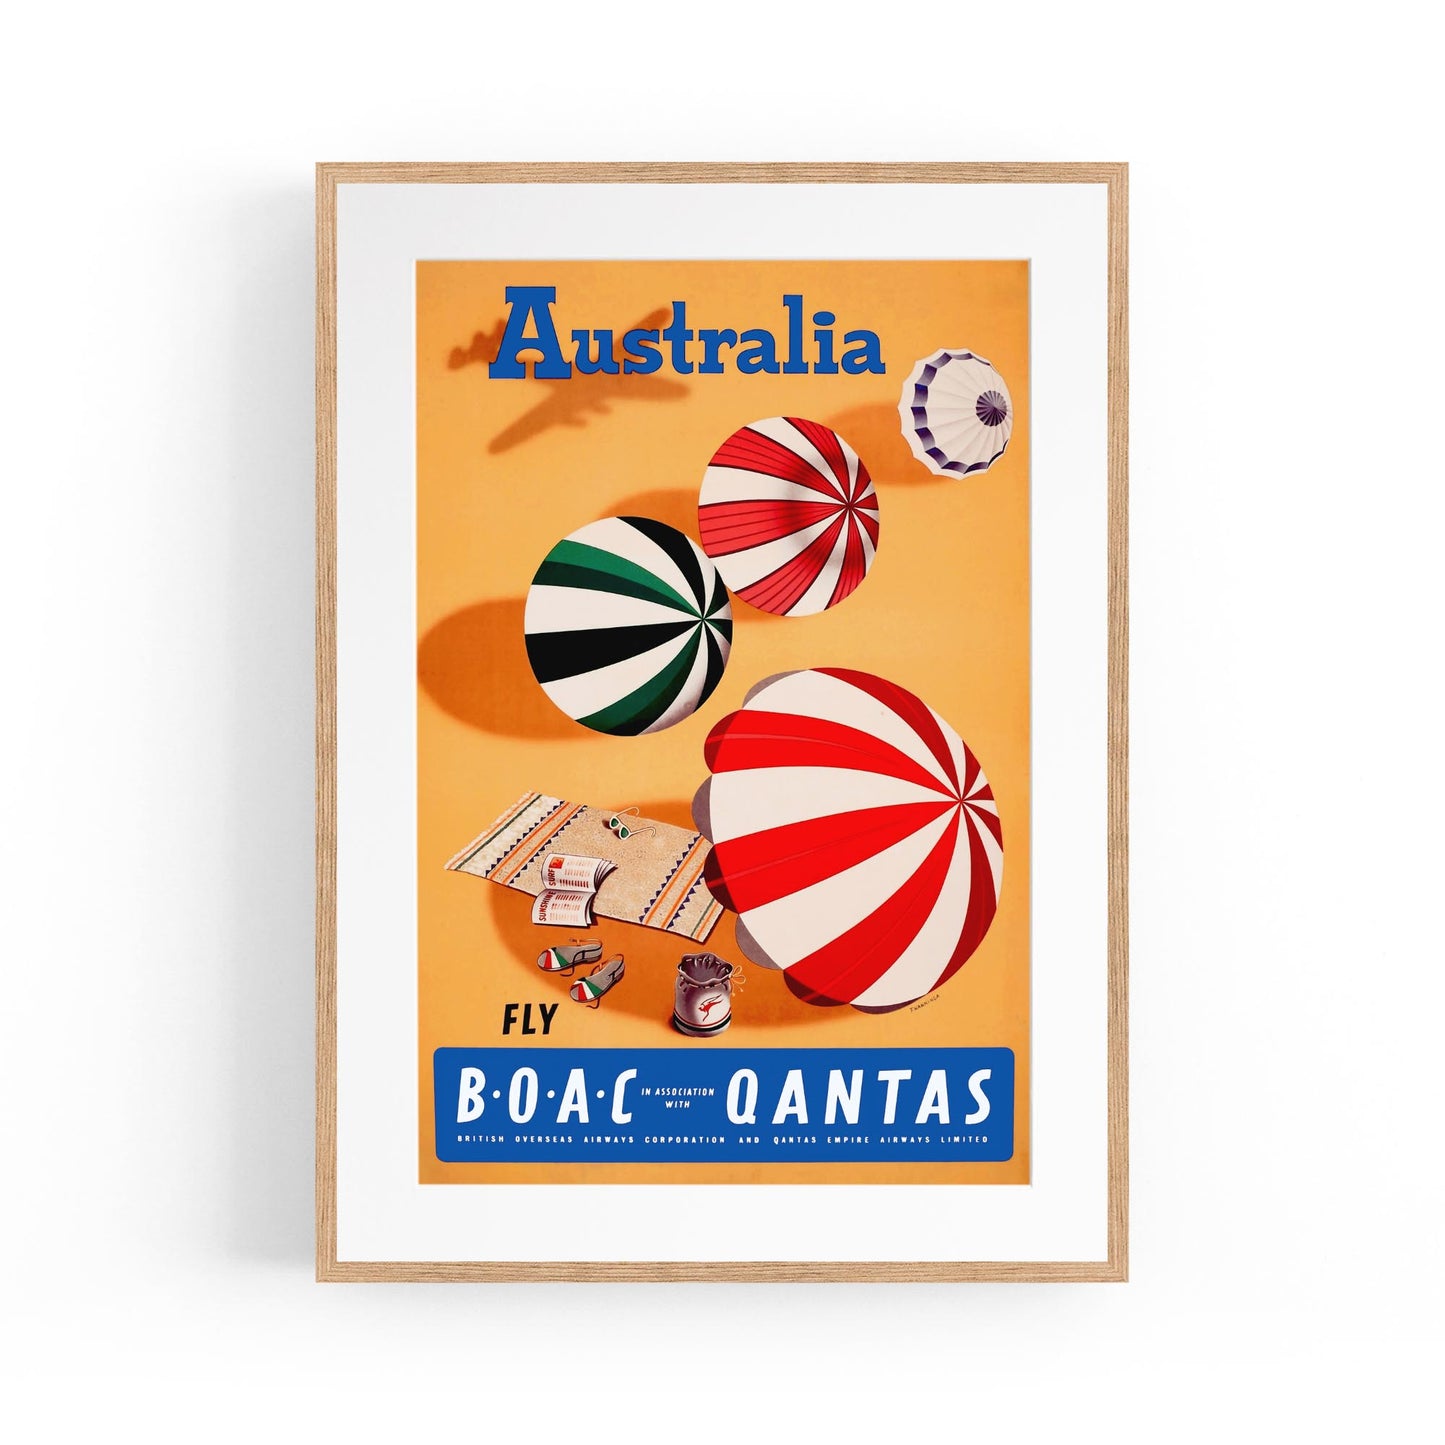 BOAC Qantas Summer Beach Australia | Framed Vintage Travel Poster